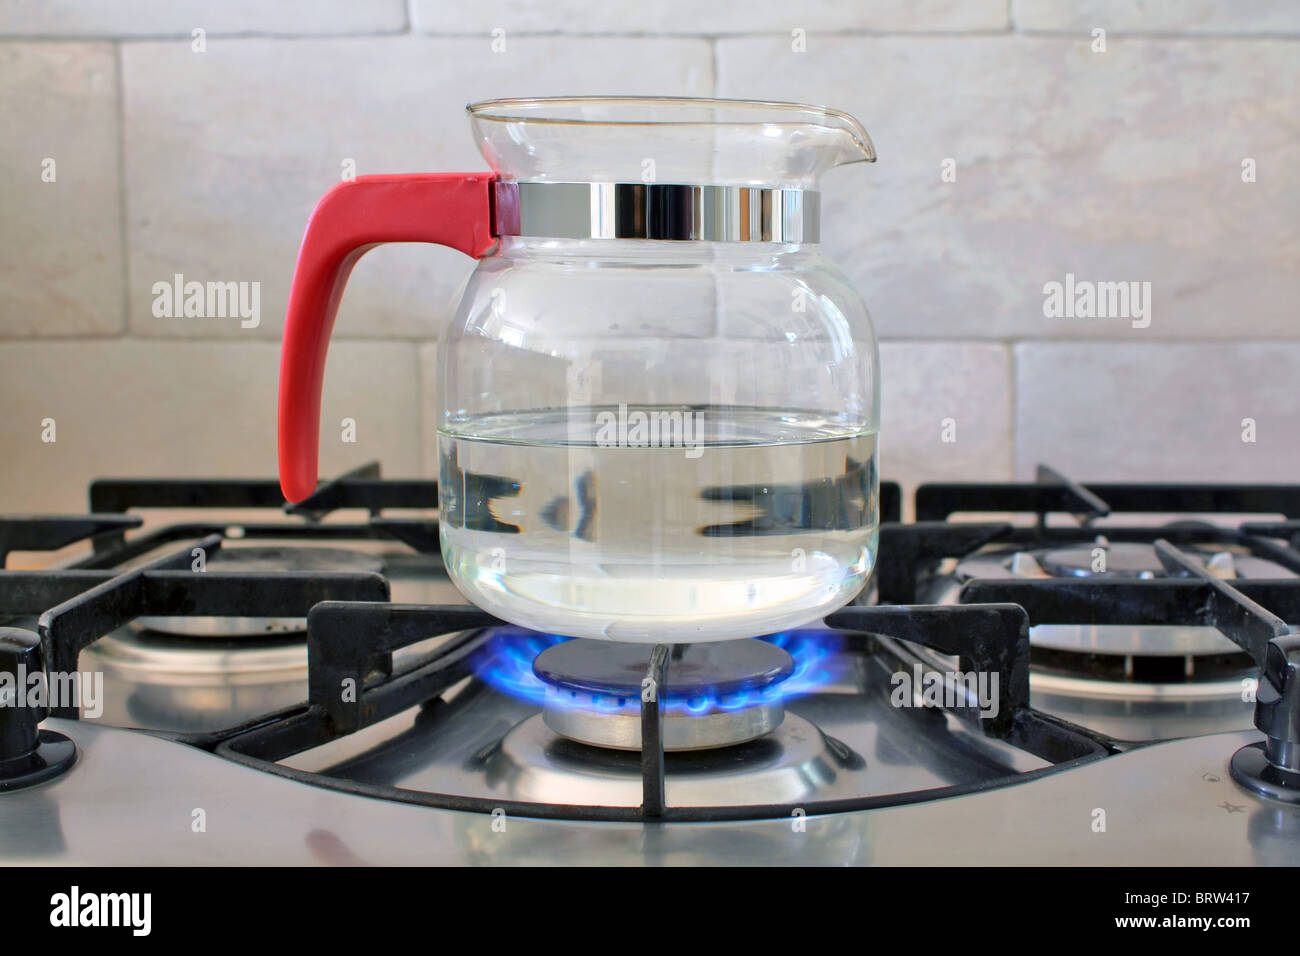 https://c8.alamy.com/comp/BRW417/glass-kettle-on-gas-cooker-BRW417.jpg